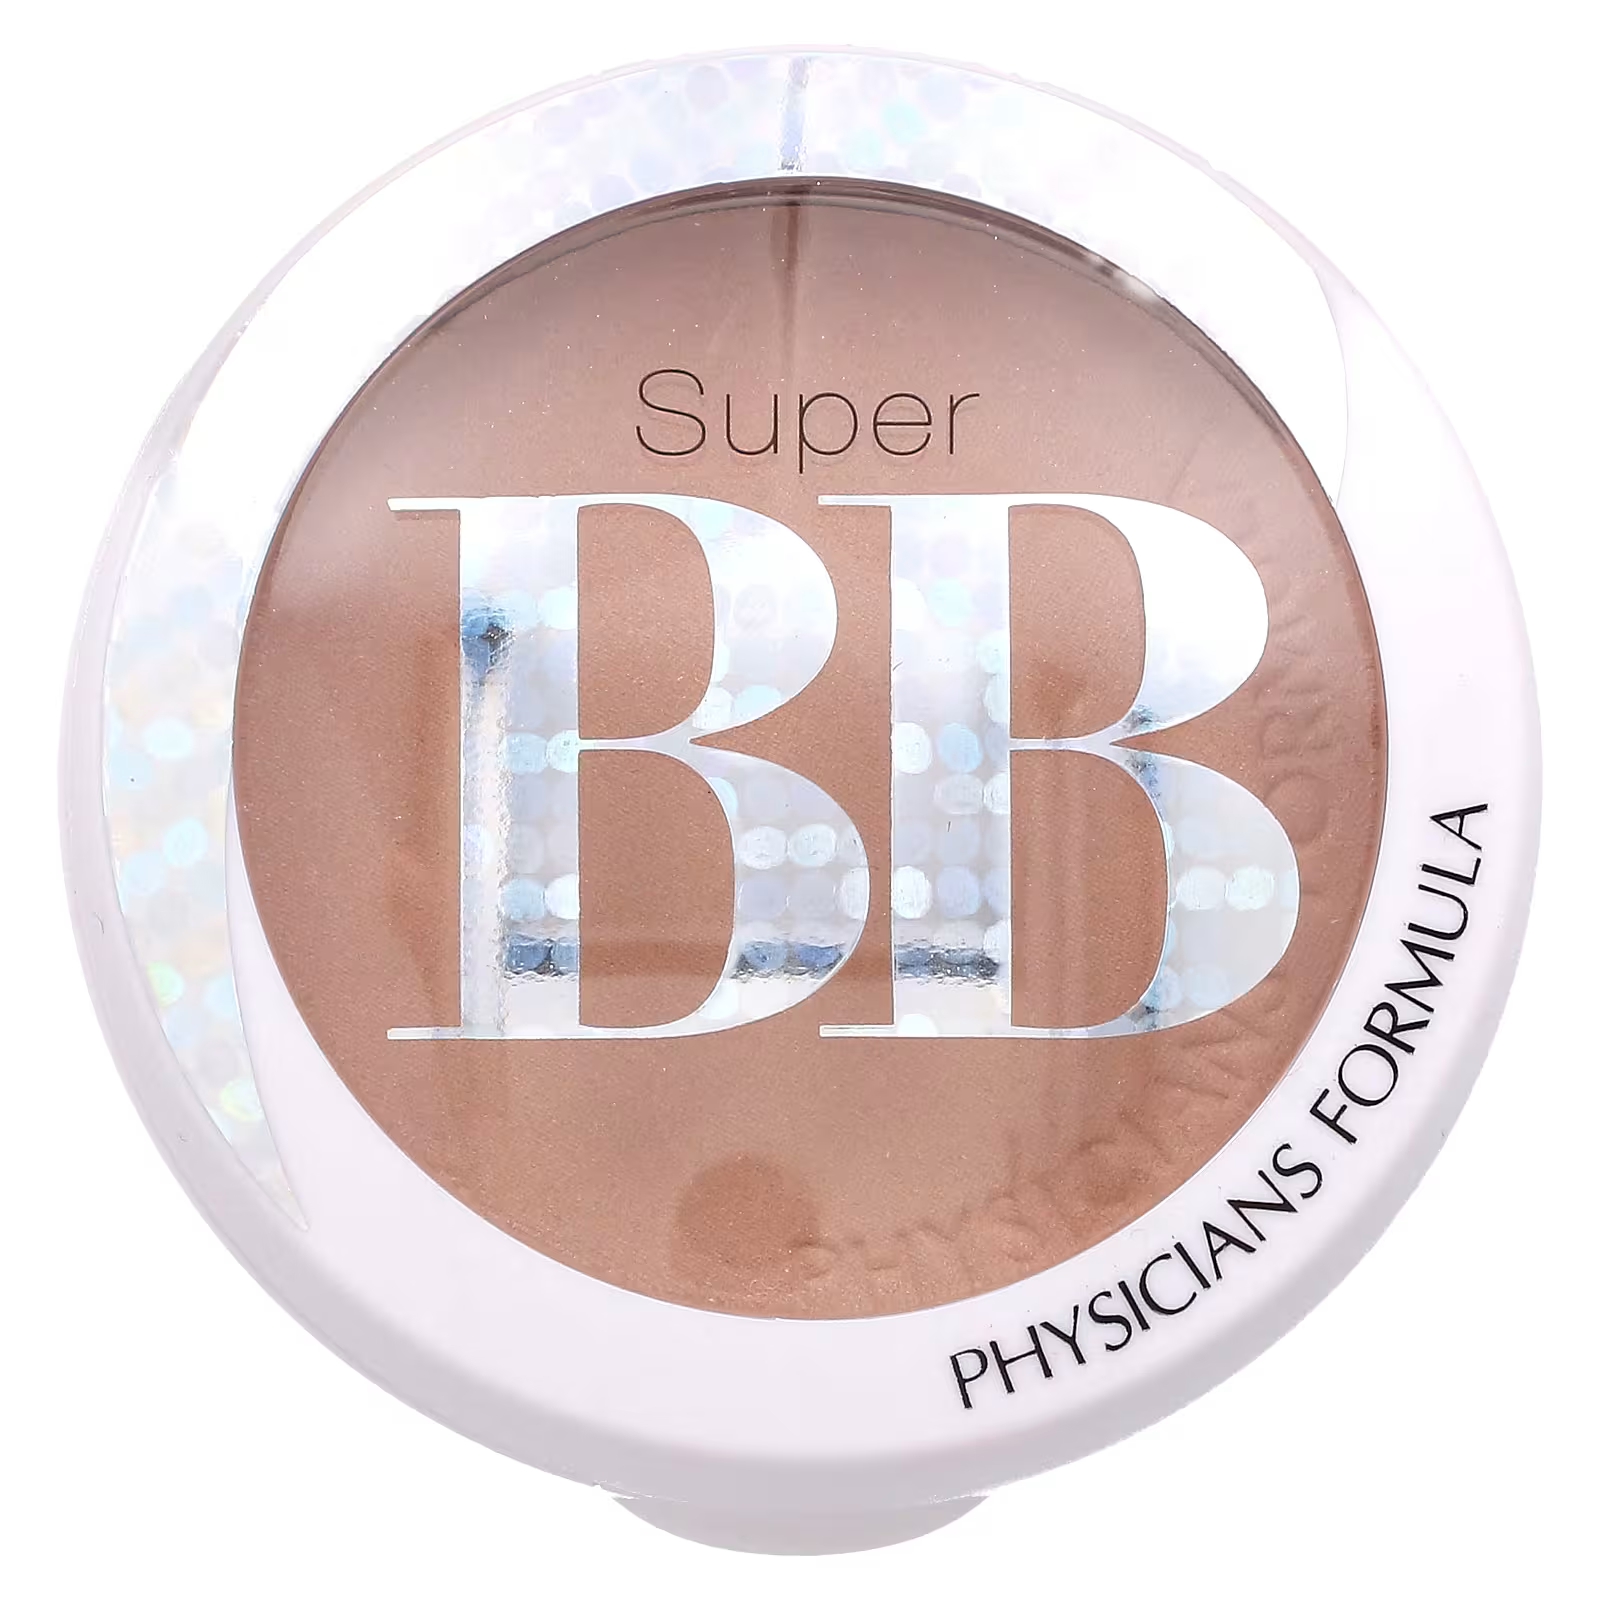 Super BB All-in-1 Beauty Balm Powder SPF 30 Легкий/средний 0,29 унции (8,3 г) Physicians Formula physicians formula super bb универсальный косметический крем бальзам spf 30 легкий средний 35 мл 1 2 жидк унции